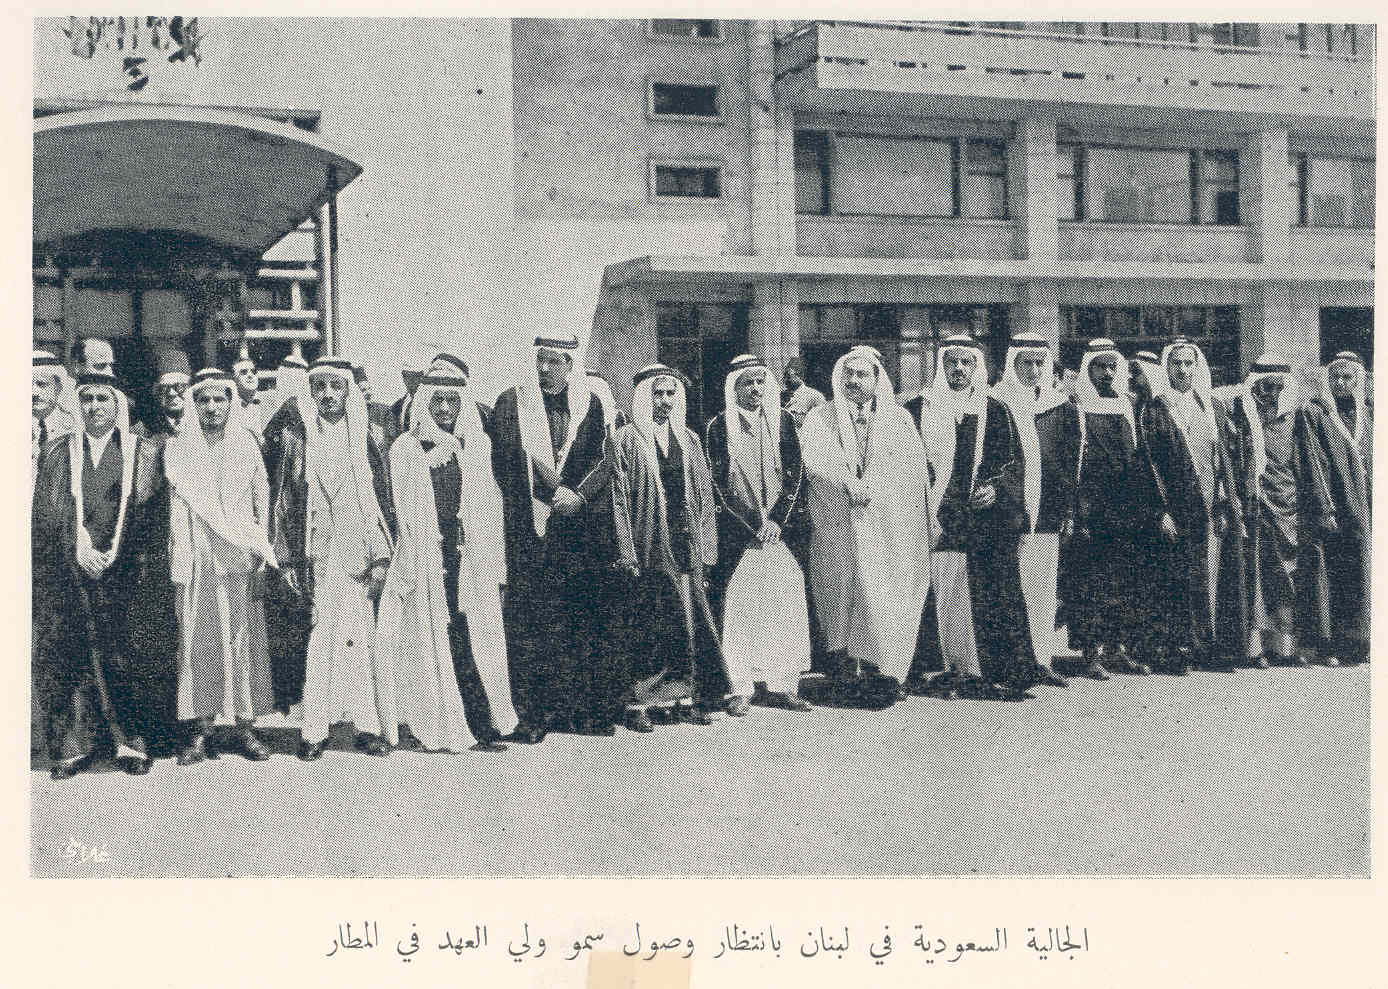 Saudi community in Lebanon, waiting for the arrival of the Crown Prince Saud bin Abdul Aziz, 1953